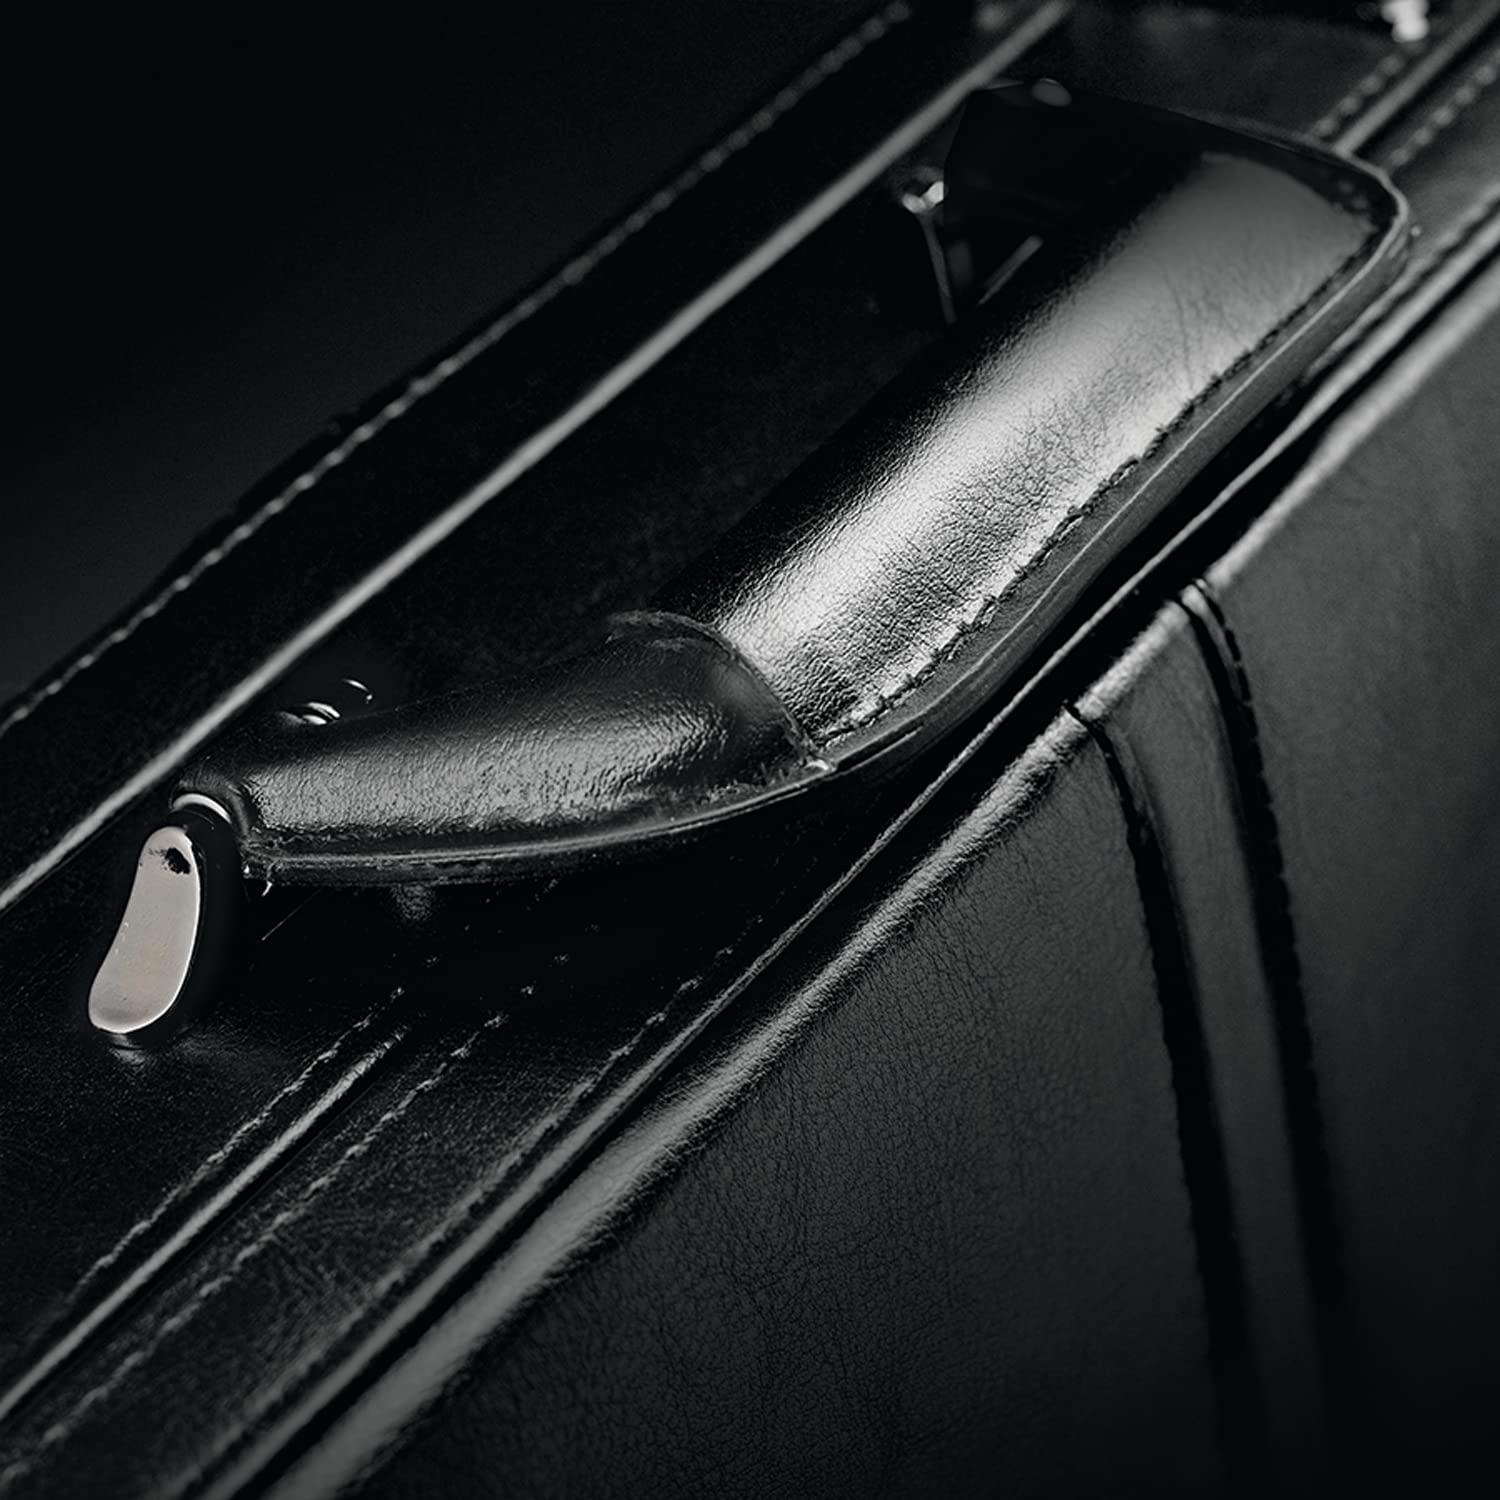 Solo Broadway Premium Leather Attaché Briefcase With Combination Locks, Black